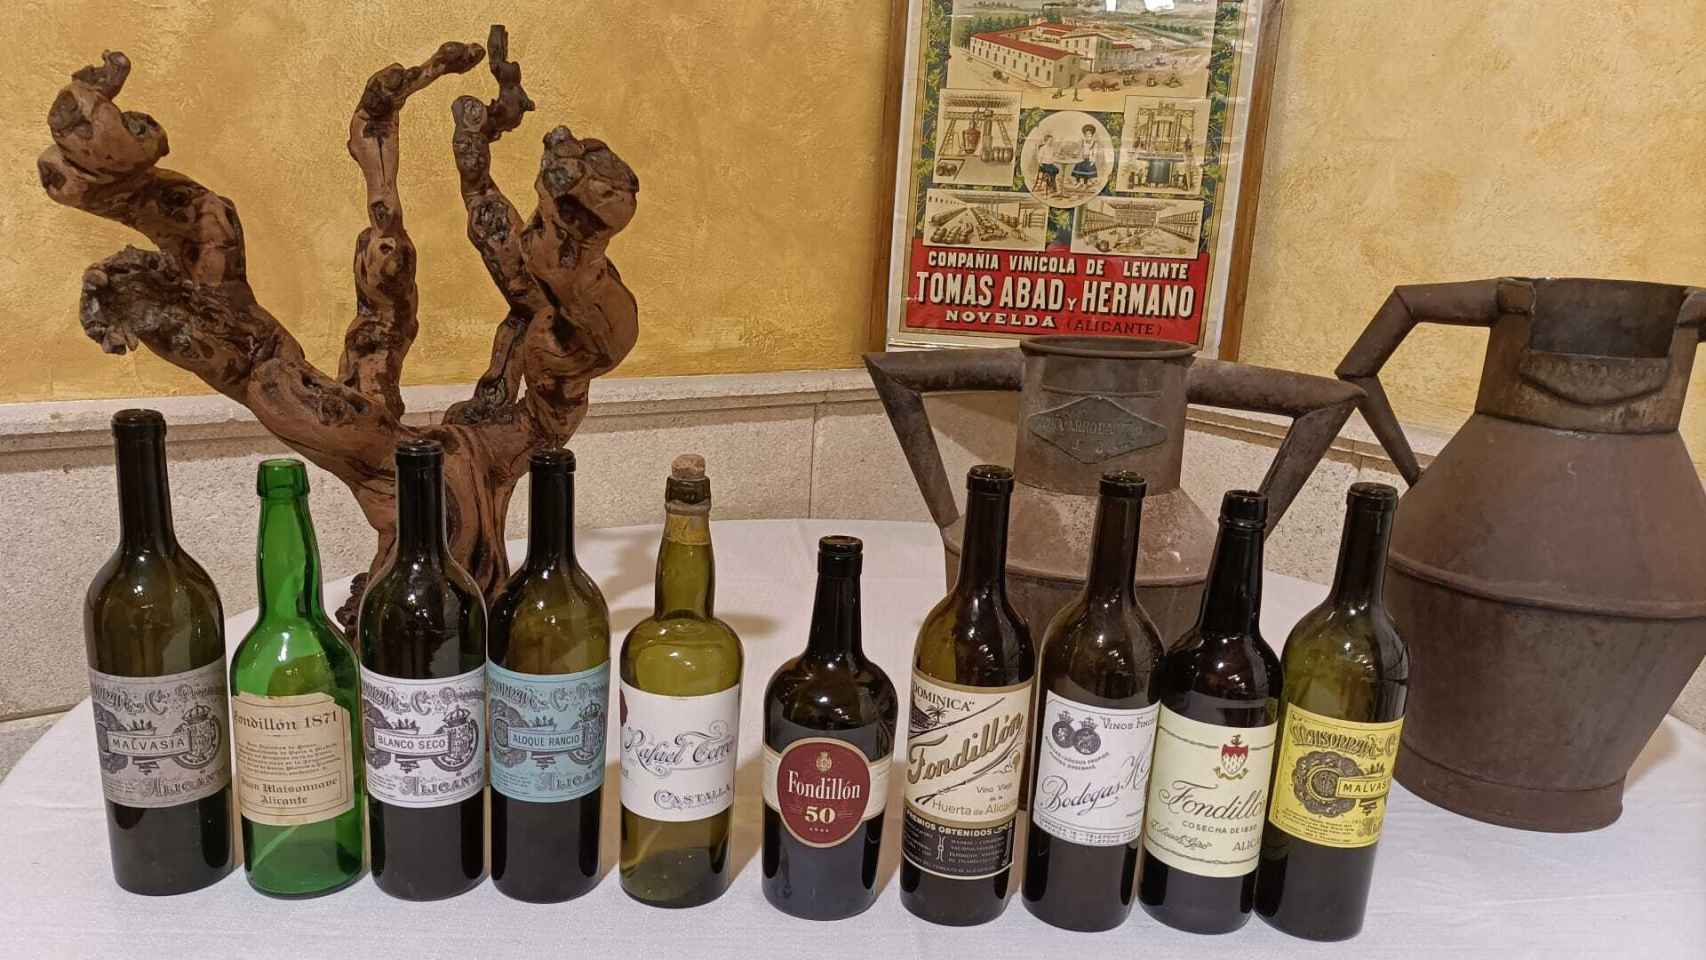 Nueve botellas históricas de fondillón de distintas bodegas alicantinas.